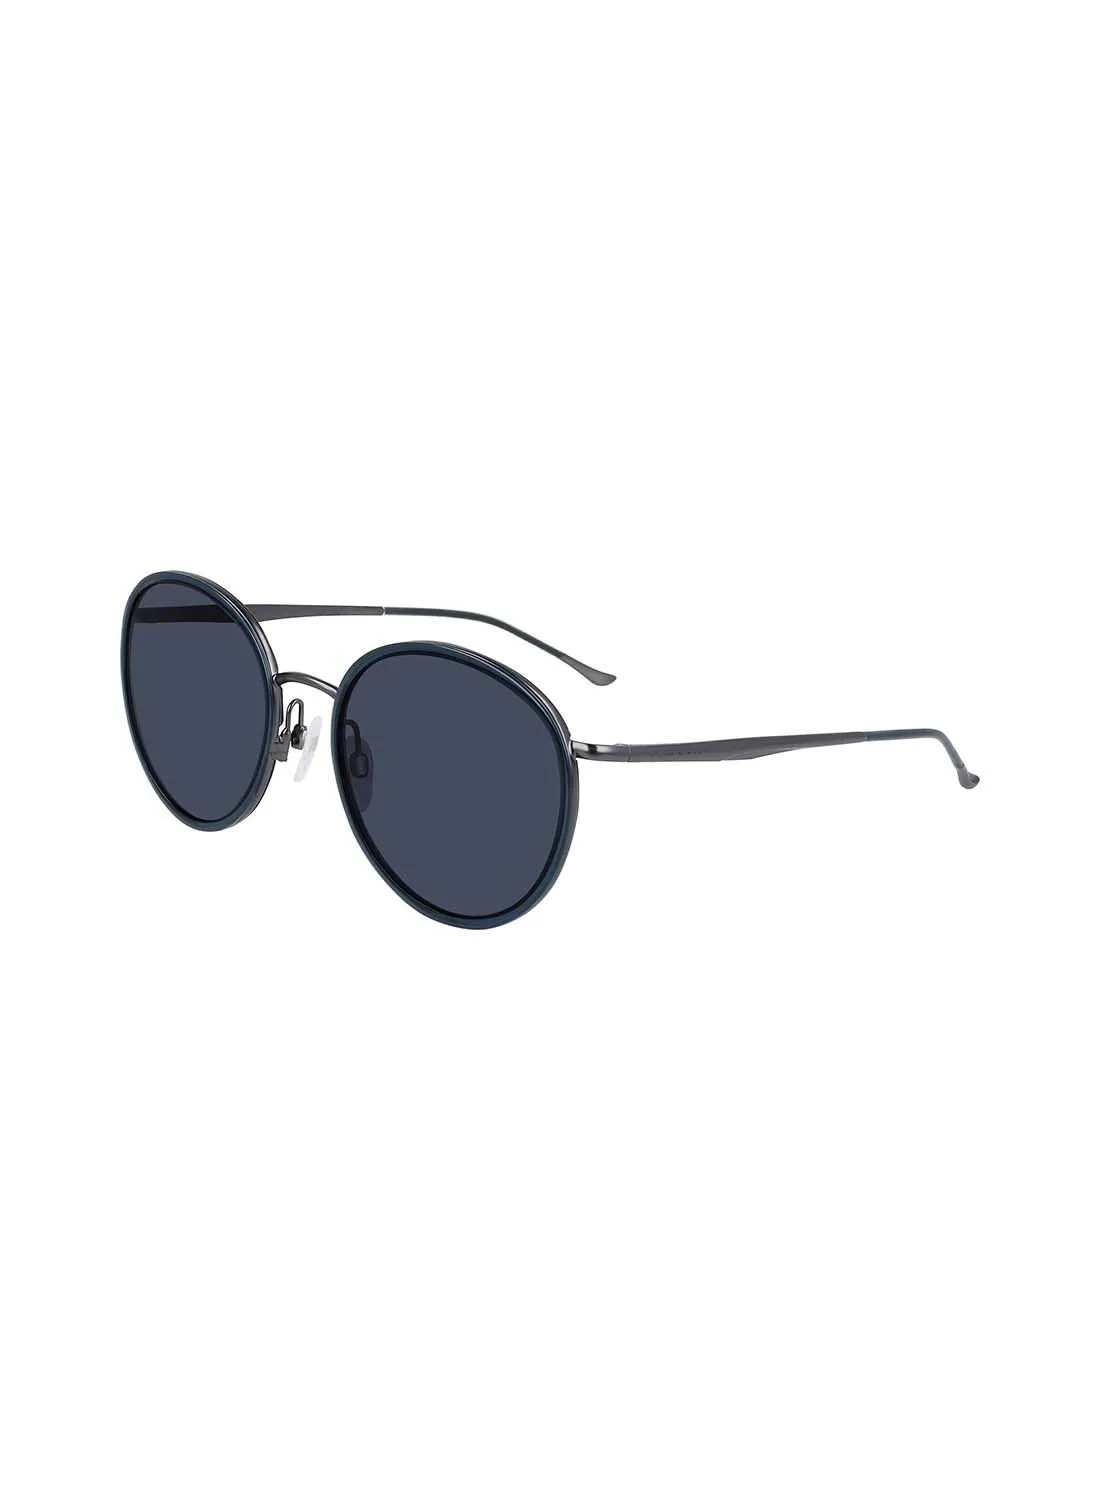 Donna Karan Full Rim Acetate Round Sunglasses DO700S 5420 (350)